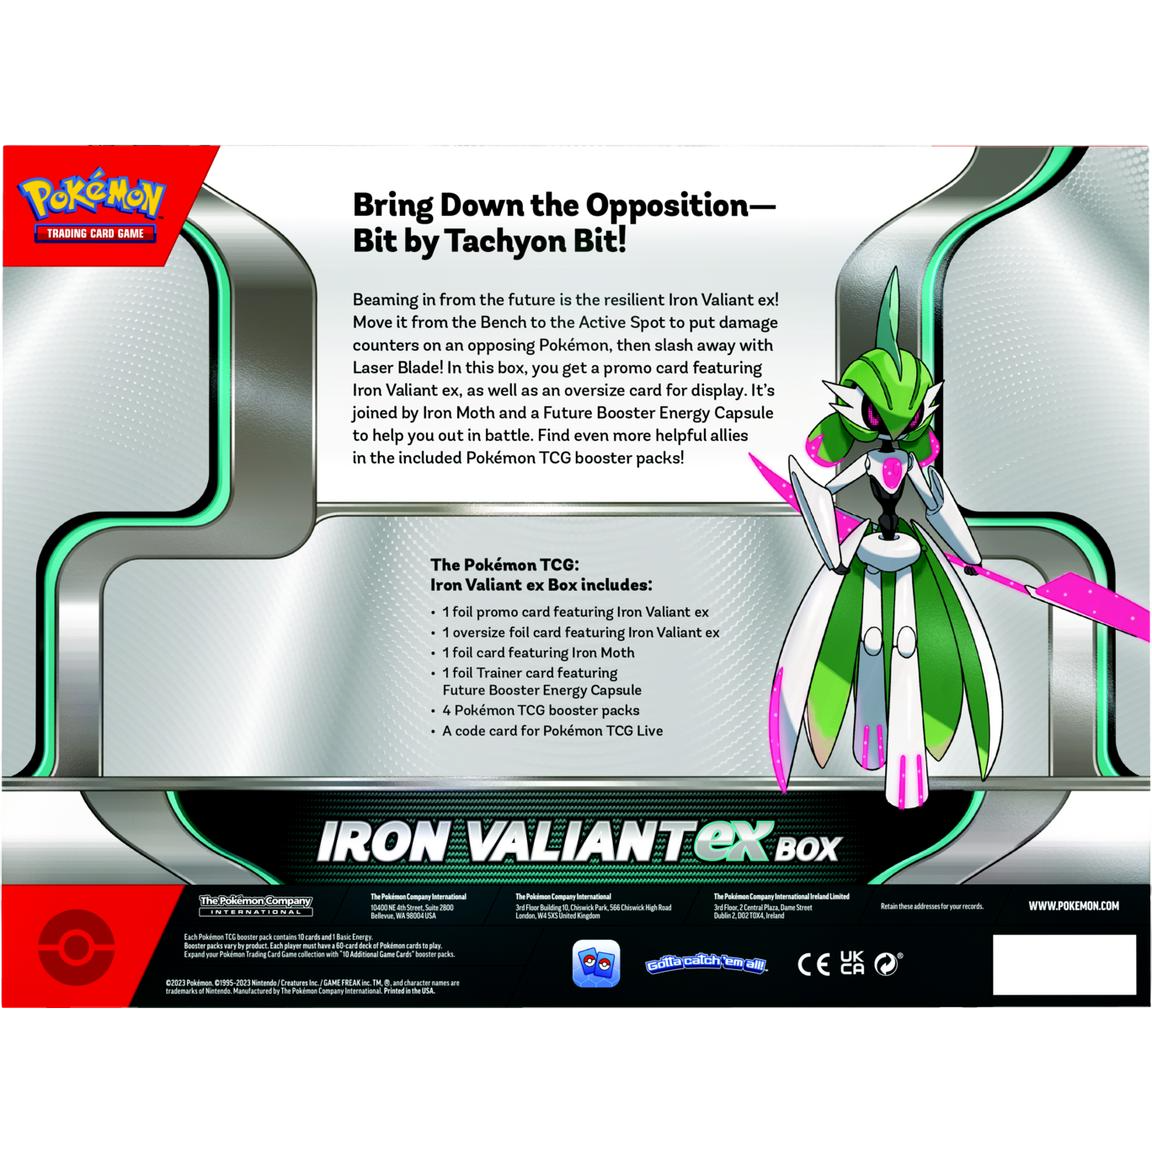 Pokémon TCG: Roaring Moon ex or Iron Valiant ex Deluxe Battle Box